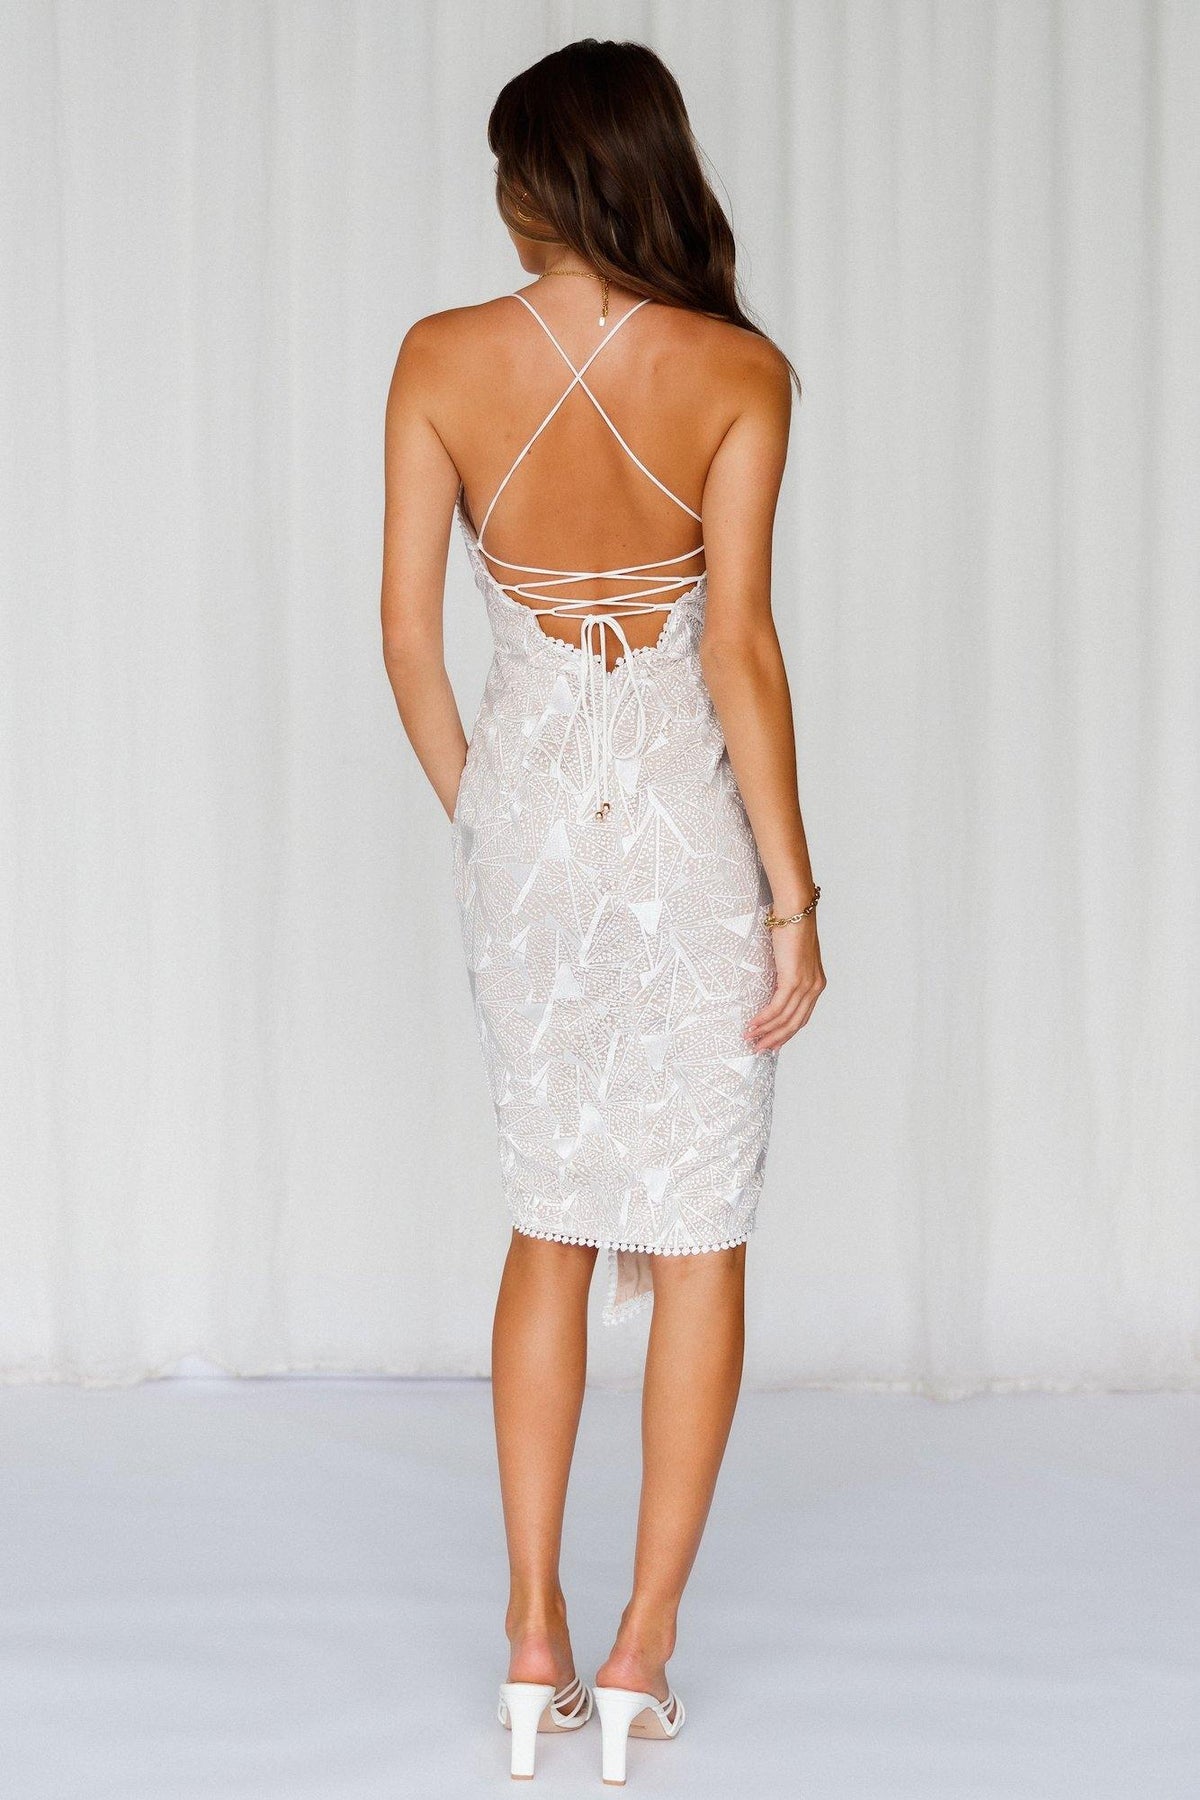 Shop Formal Dress - Shine Queen Midi Dress White fifth image